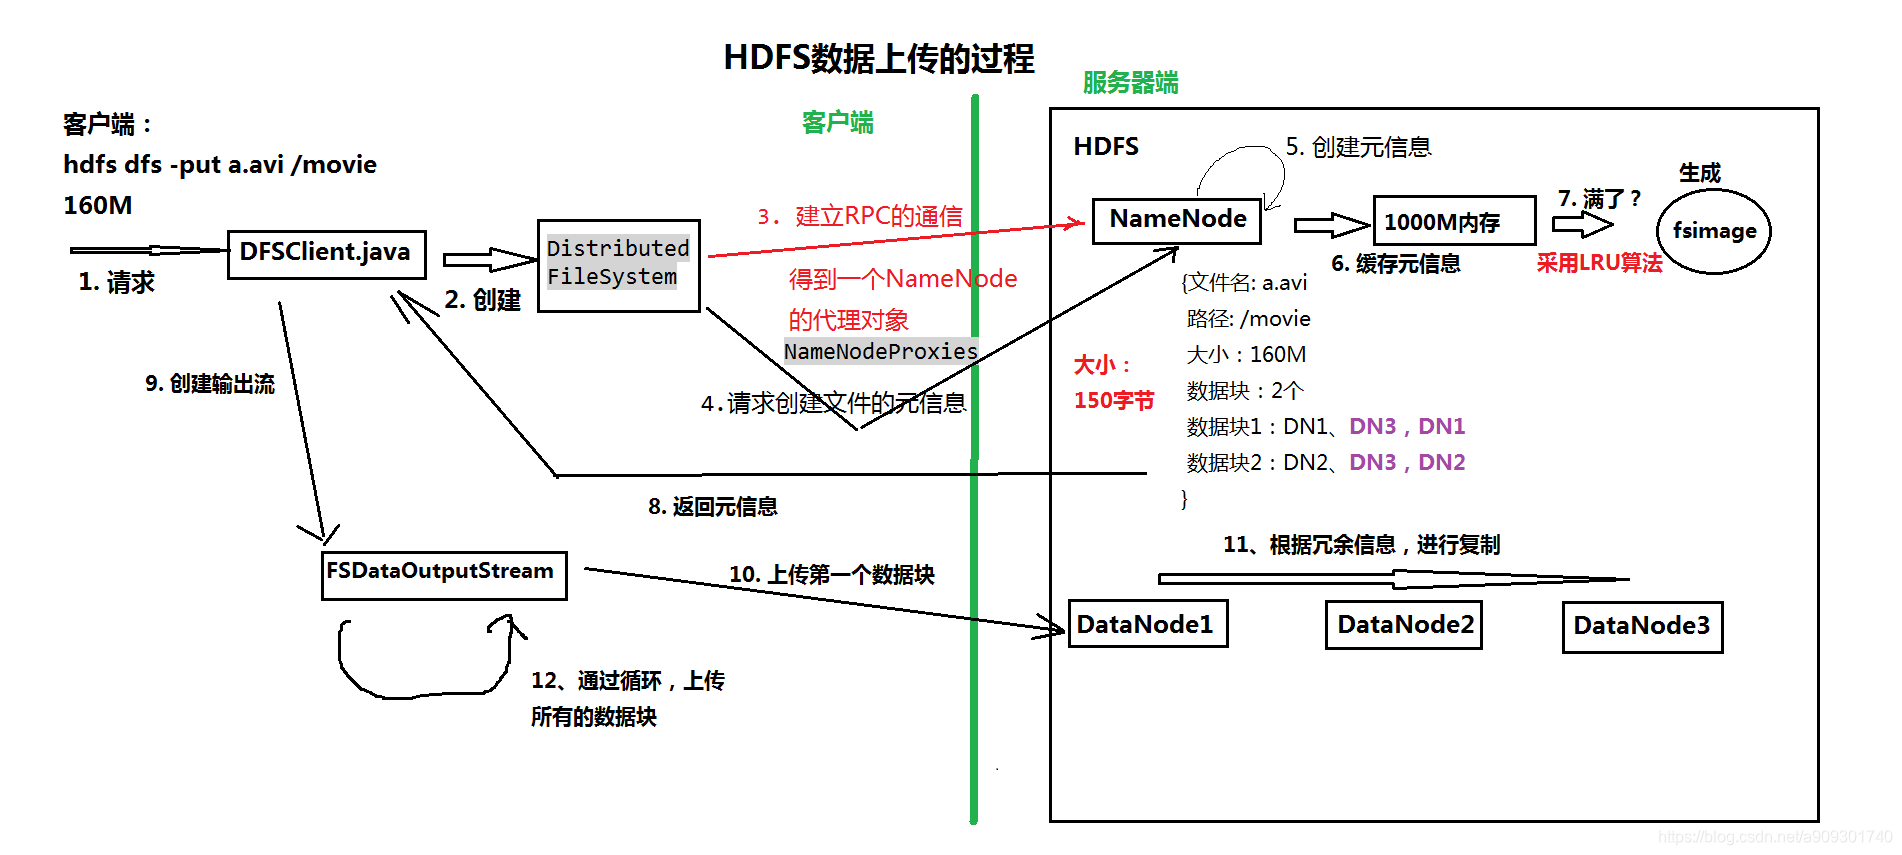 HDFS数据上传过程